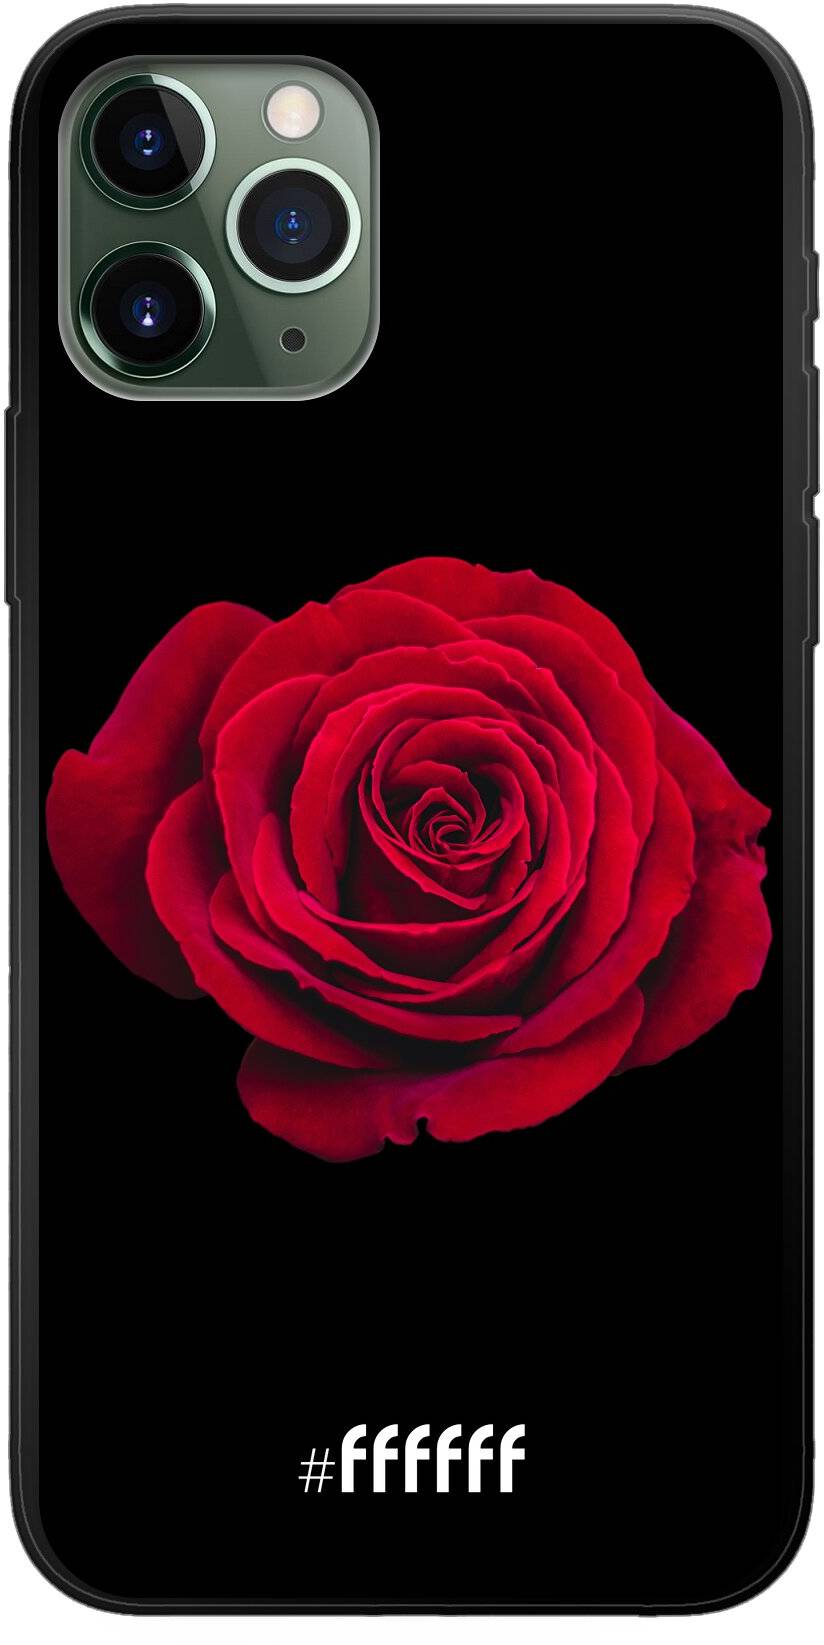 Radiant Rose iPhone 11 Pro